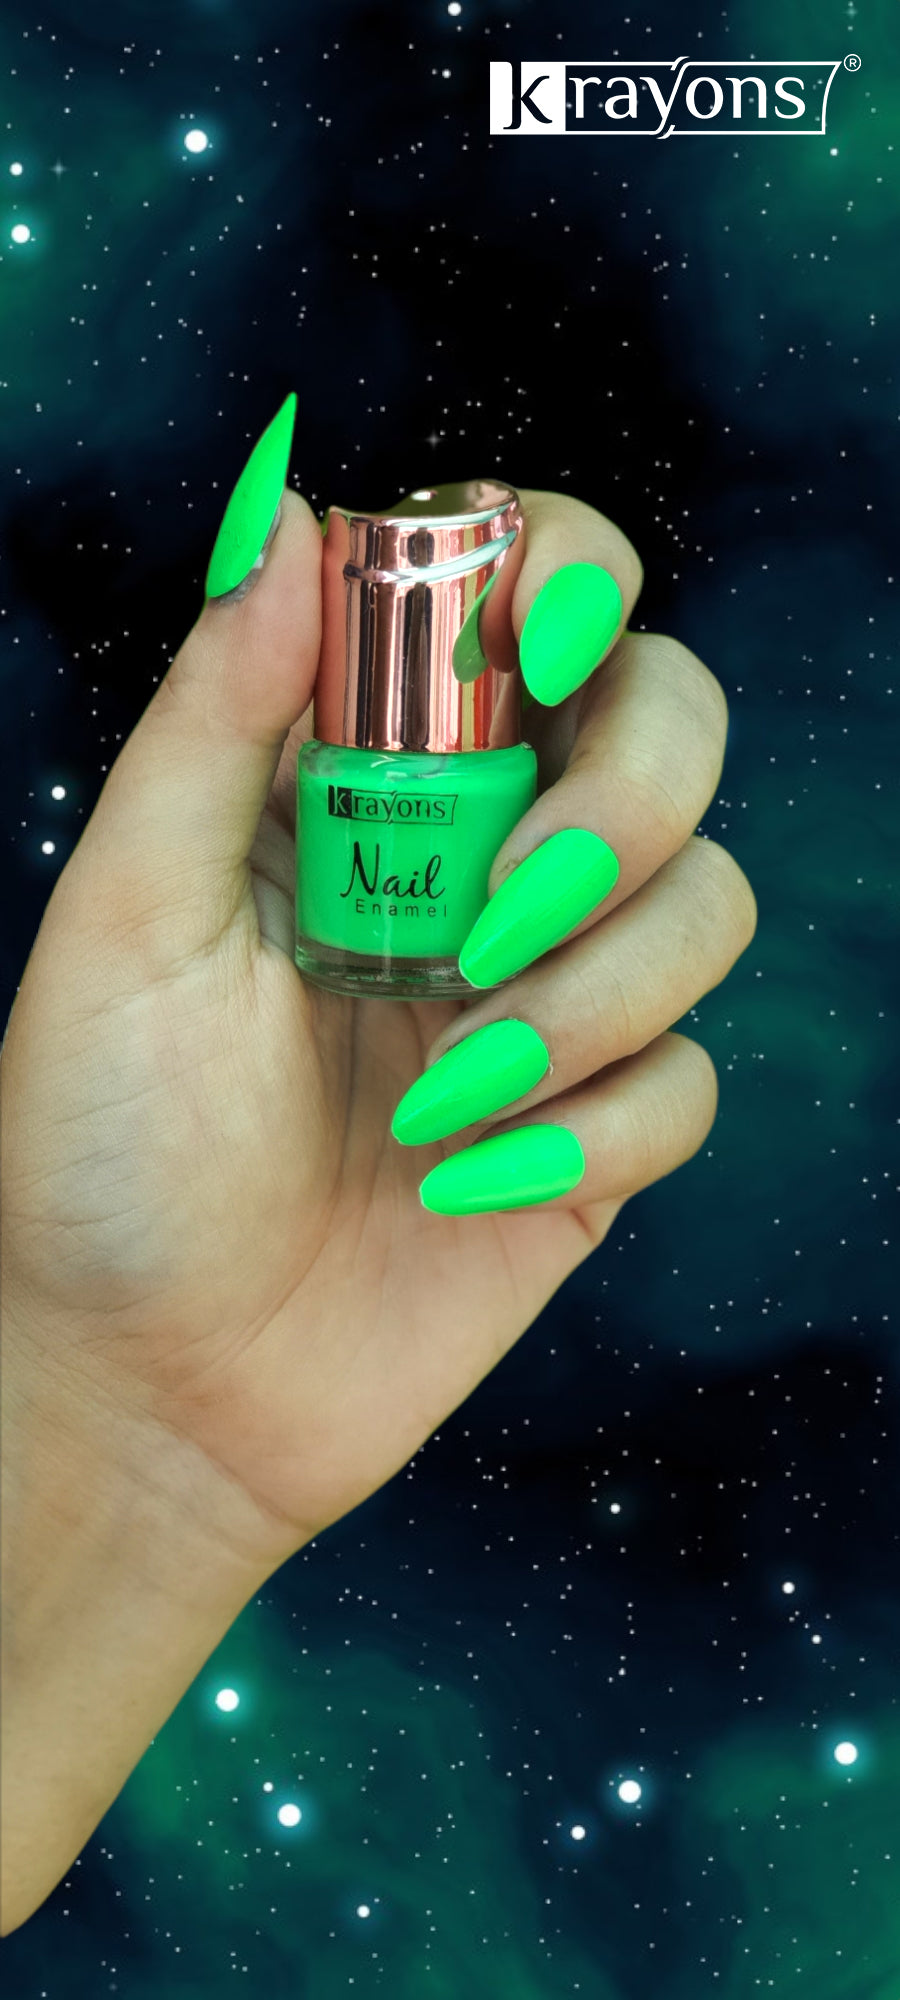  Neon Green